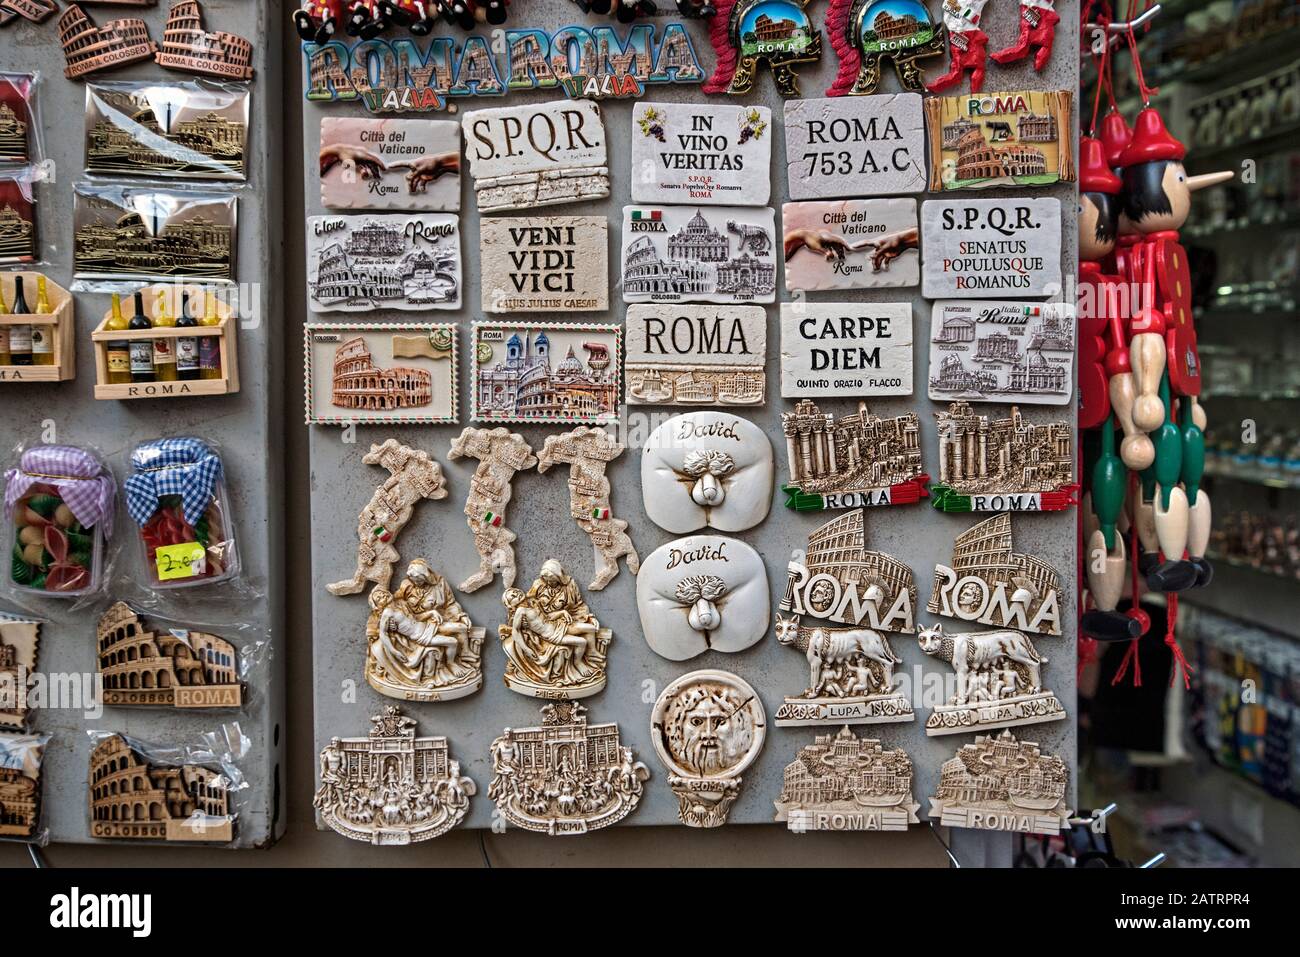 Magnet magnets souvenir souvenirs -Fotos und -Bildmaterial in hoher  Auflösung – Alamy